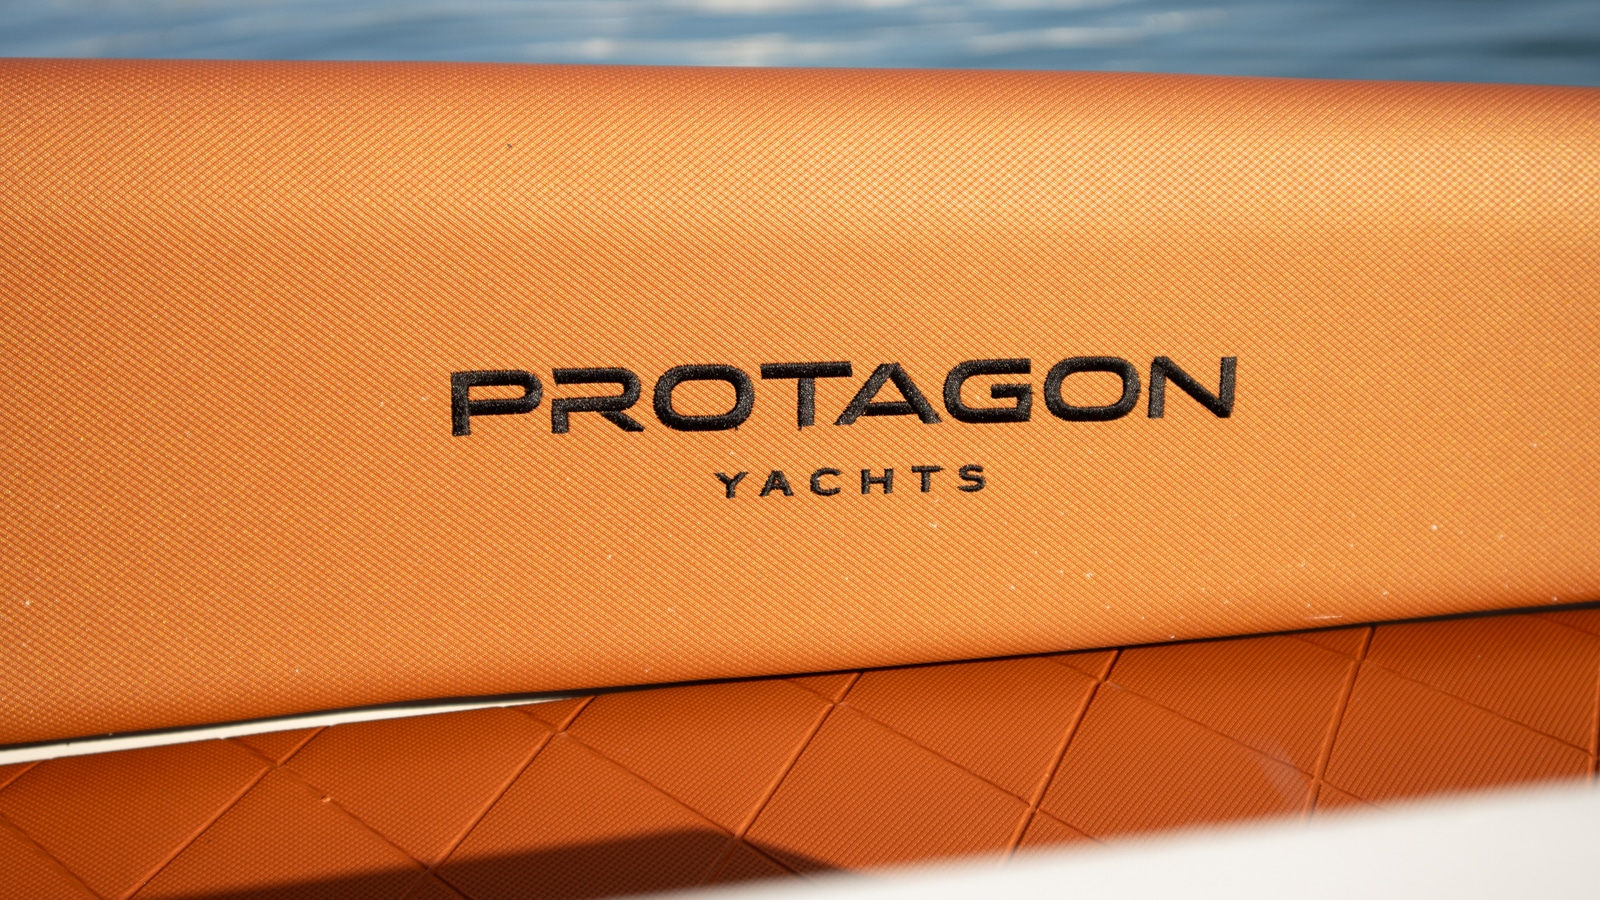 Protagon yachts